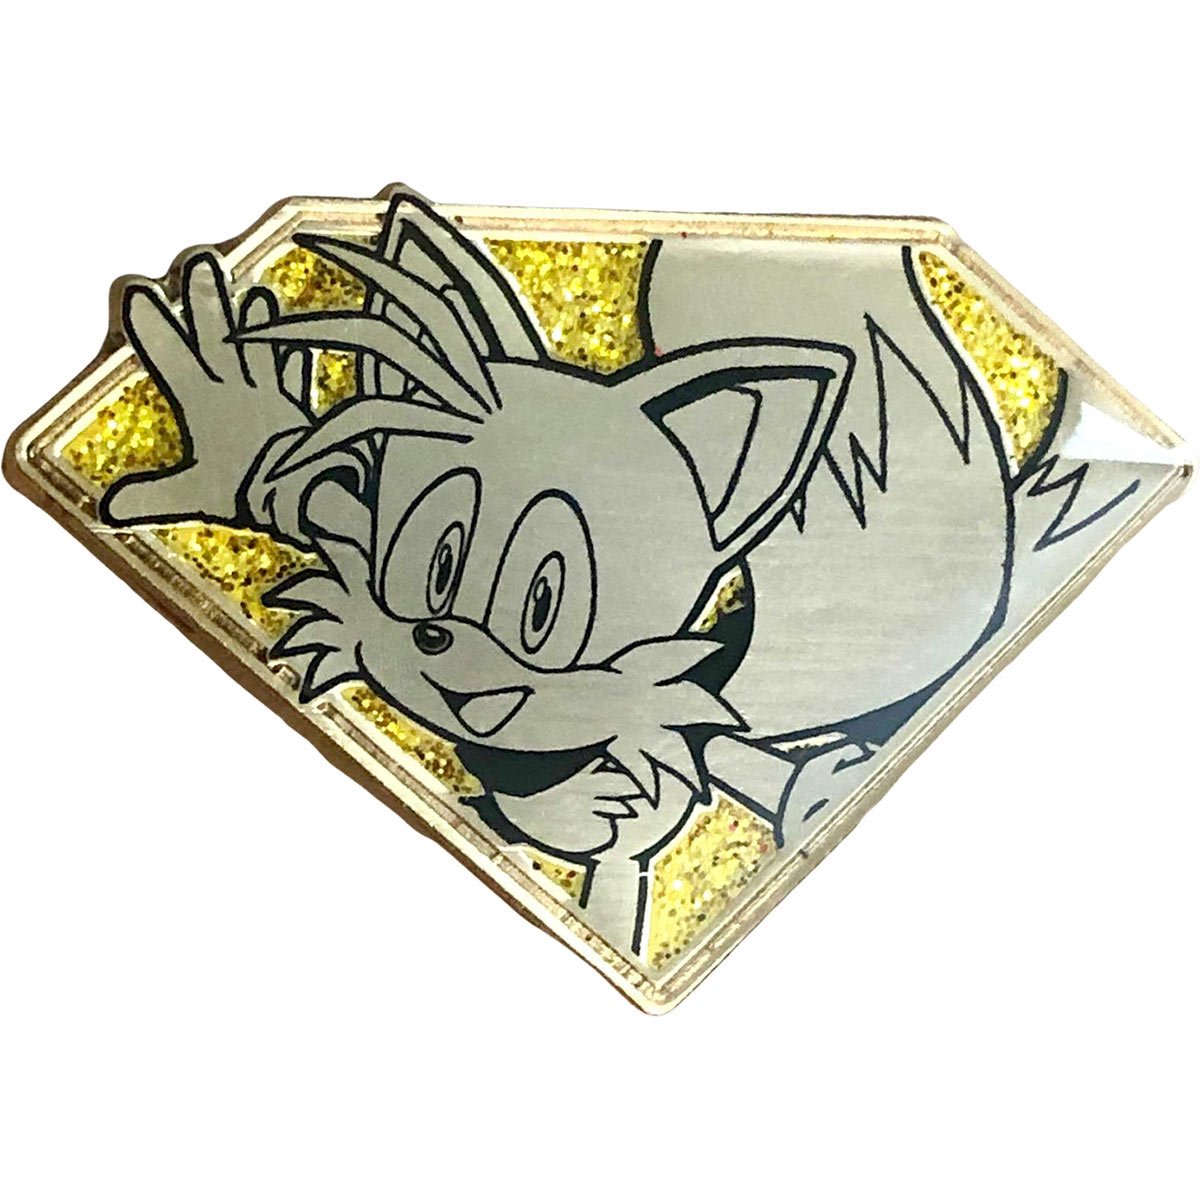 Sonic the Hedgehog Super Sonic Limited Edition Gold Emblem Enamel Pin Figure